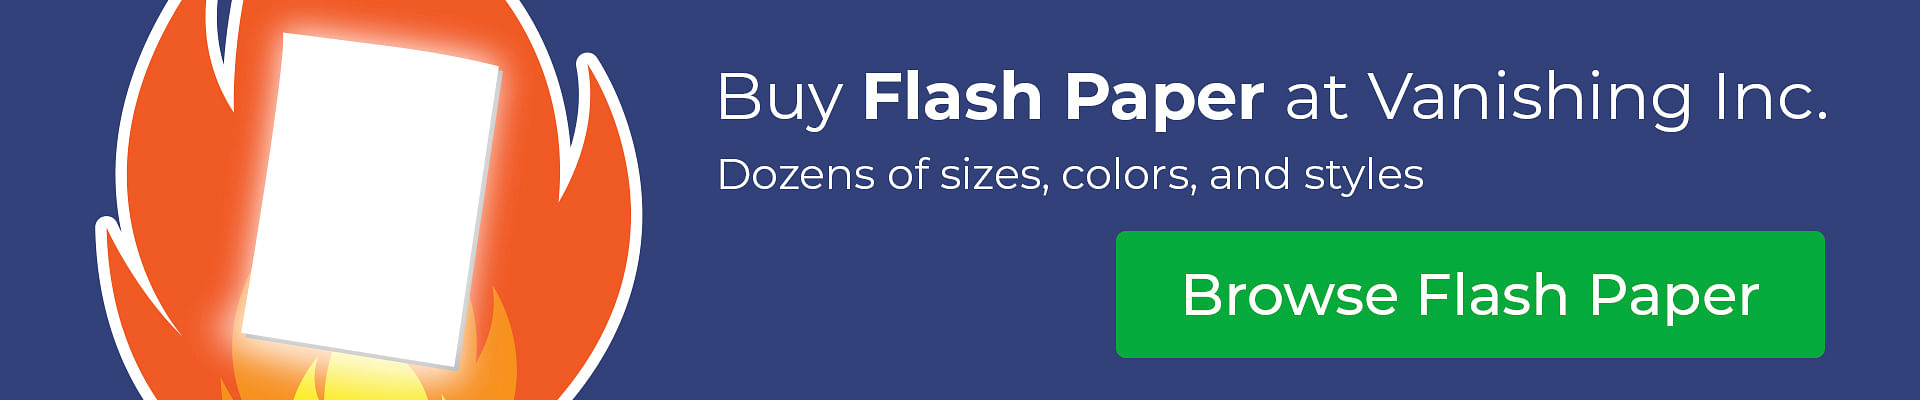 Buy Flash Paper